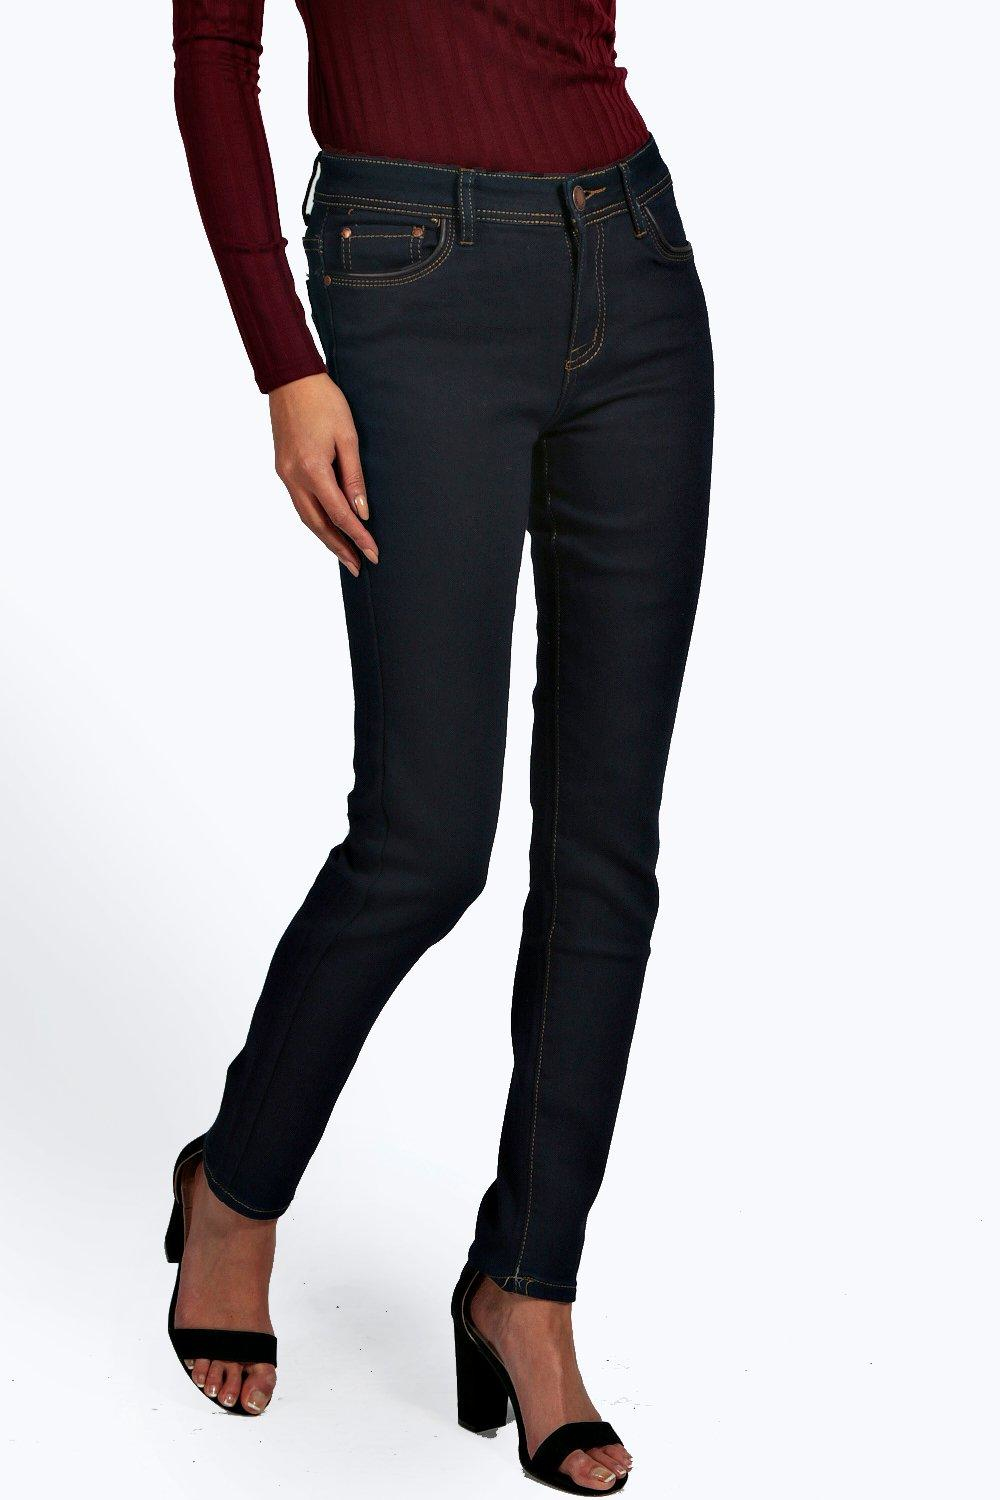 Lyst - Boohoo Jess Mid Rise Skinny Jeans in Black